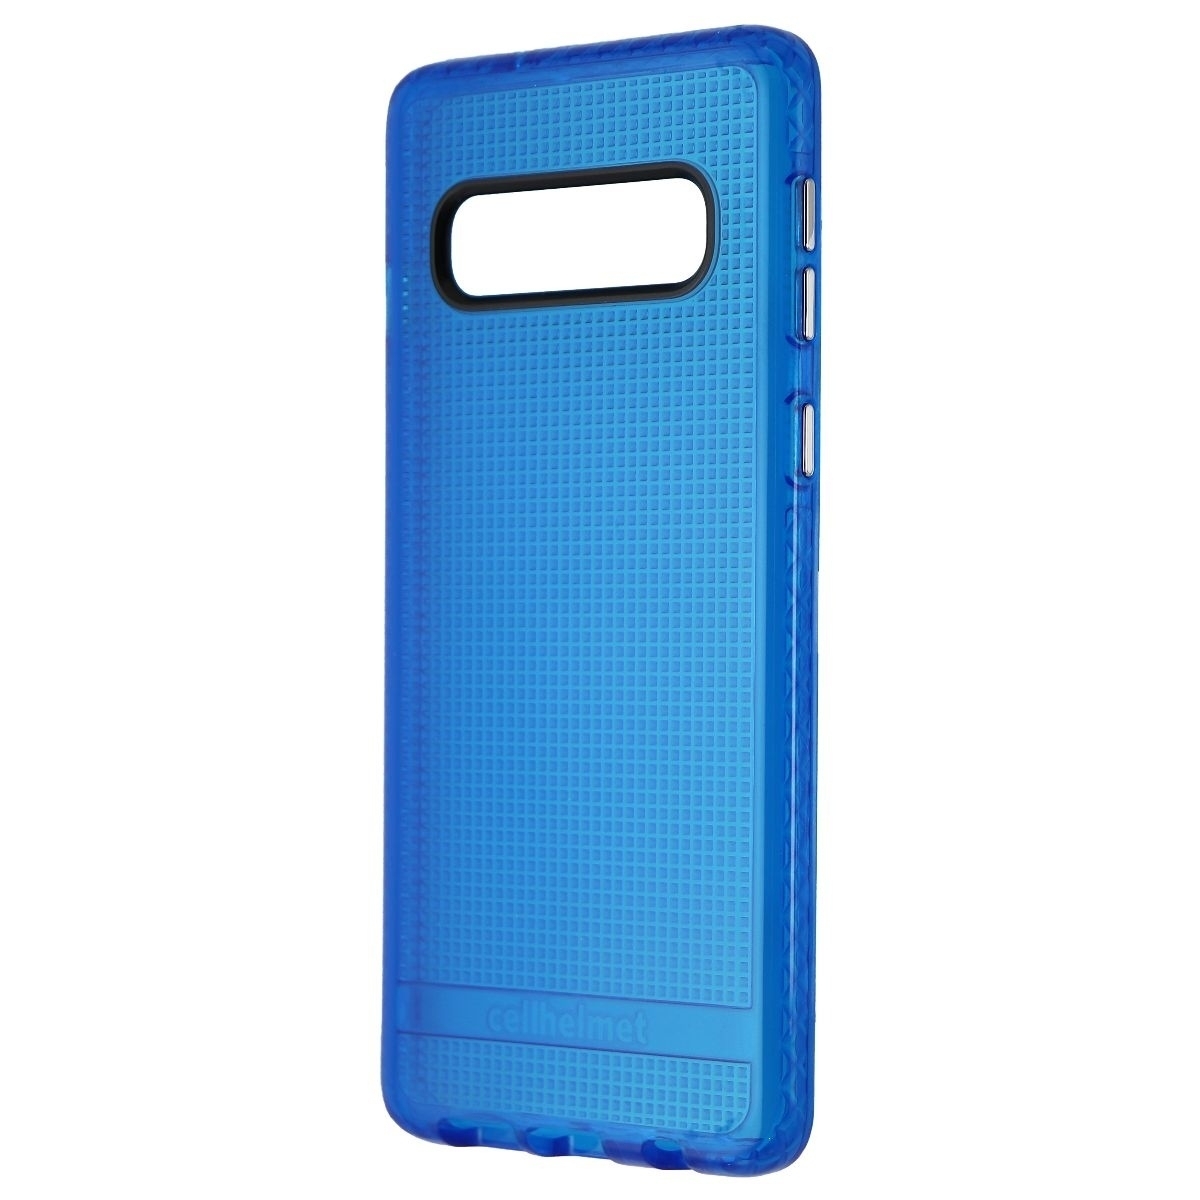 Cellhelmet Altitude X Pro Series Protective Case For Galaxy S10 - Blue